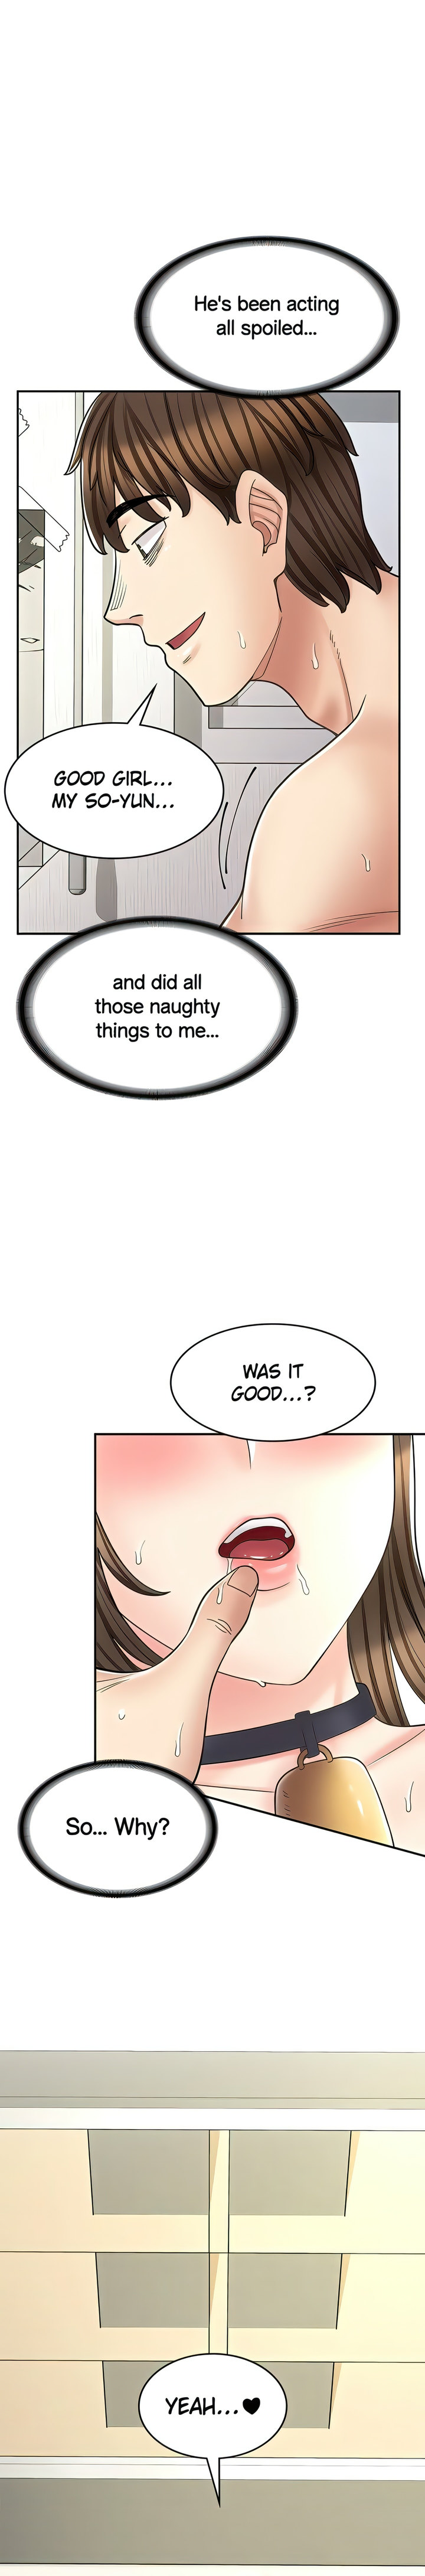 Erotic Manga Café Girls - Chapter 36 Page 1